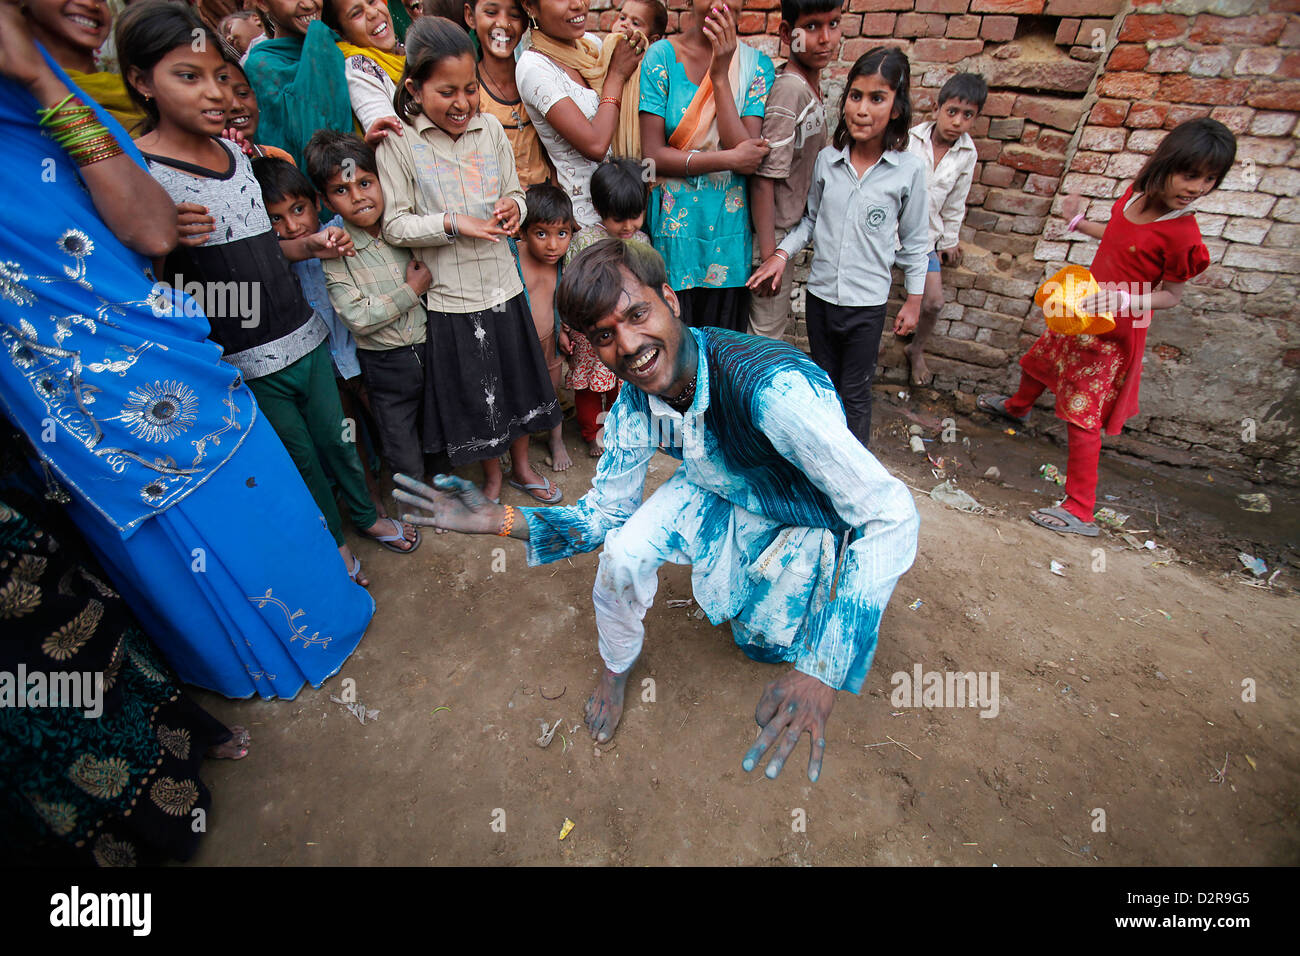 Dancing in the street during Holi celebration in Goverdan, Uttar Pradesh, India, Asia Stock Photo